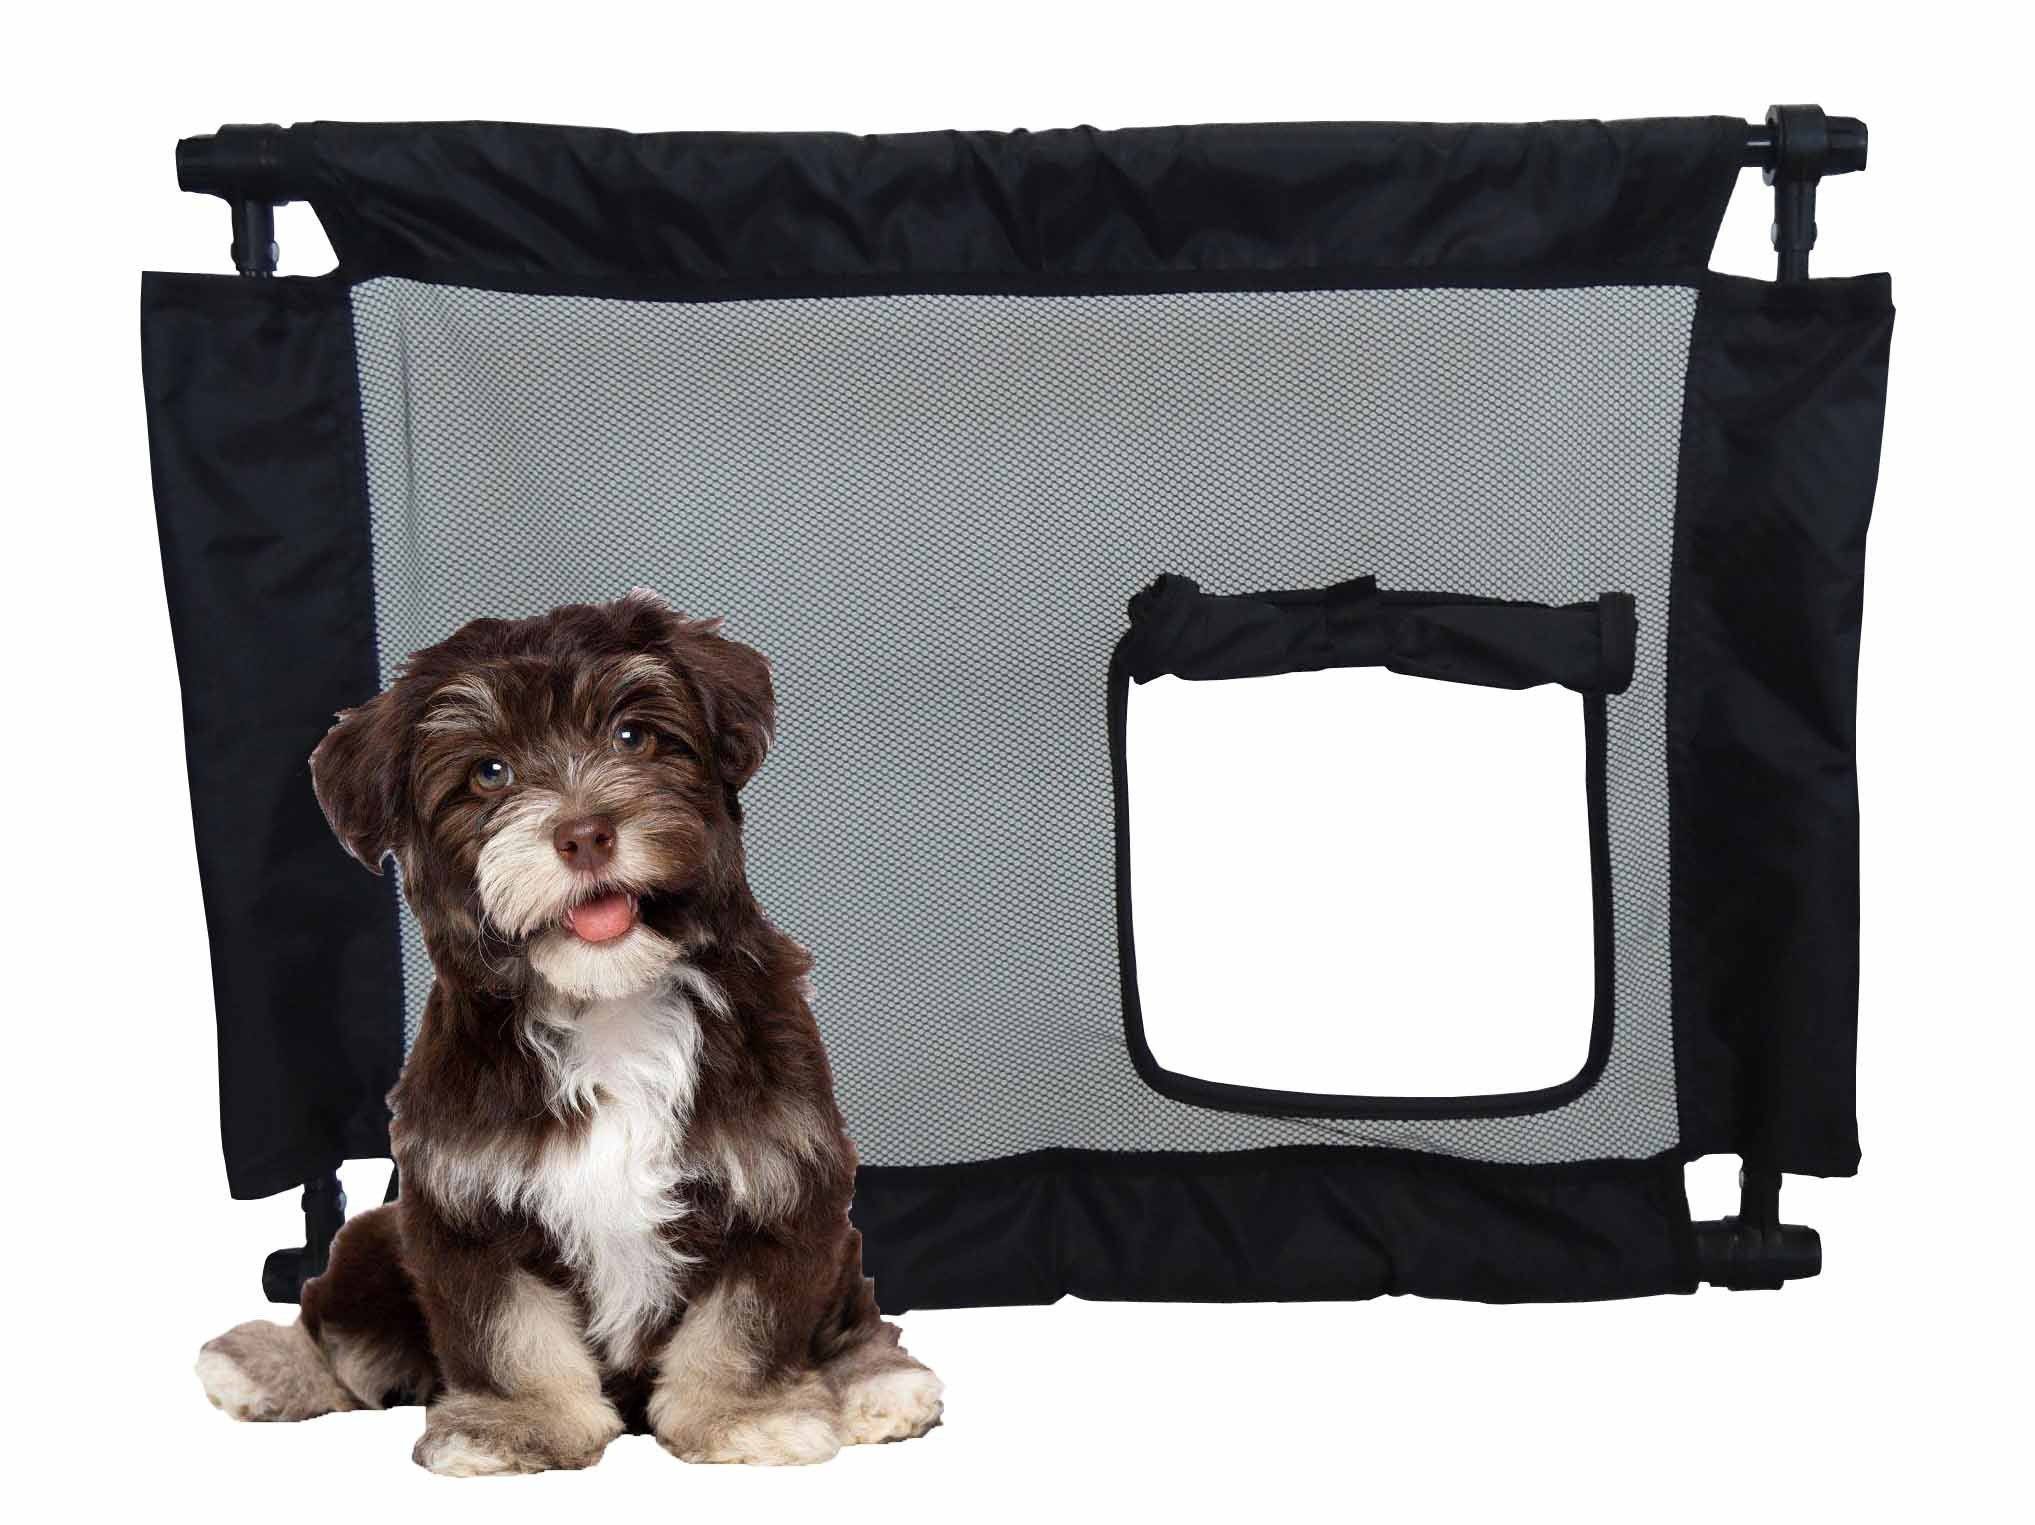 Pet Life ® 'Porta Gate' Anti-Drilling Nylon Mesh Collapsible Folding Travel Safety Pet Cat Dog Gate w/ Zippered Entrance Black 